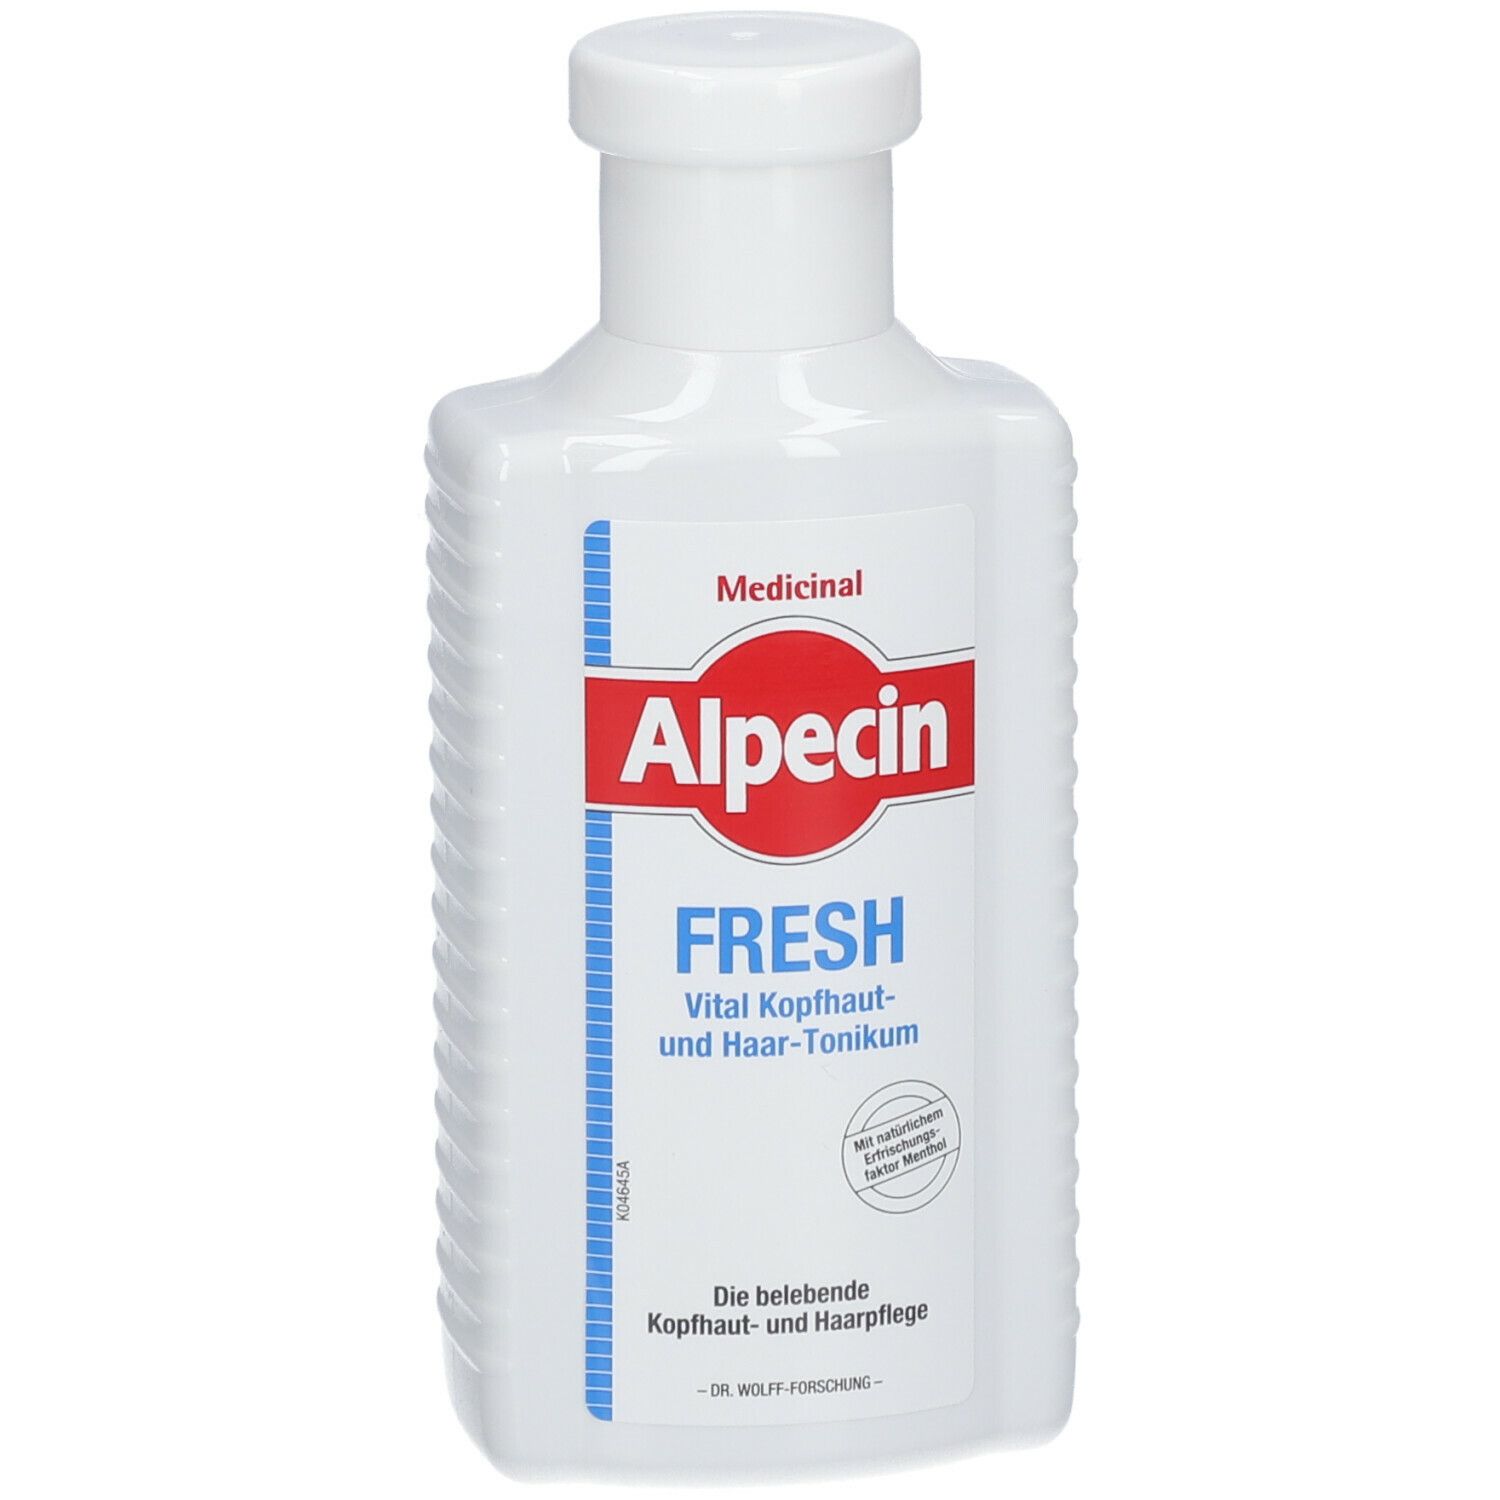 Alpecin Medicinal FRESH Vital Kopfhaut- und Haar-Tonikum